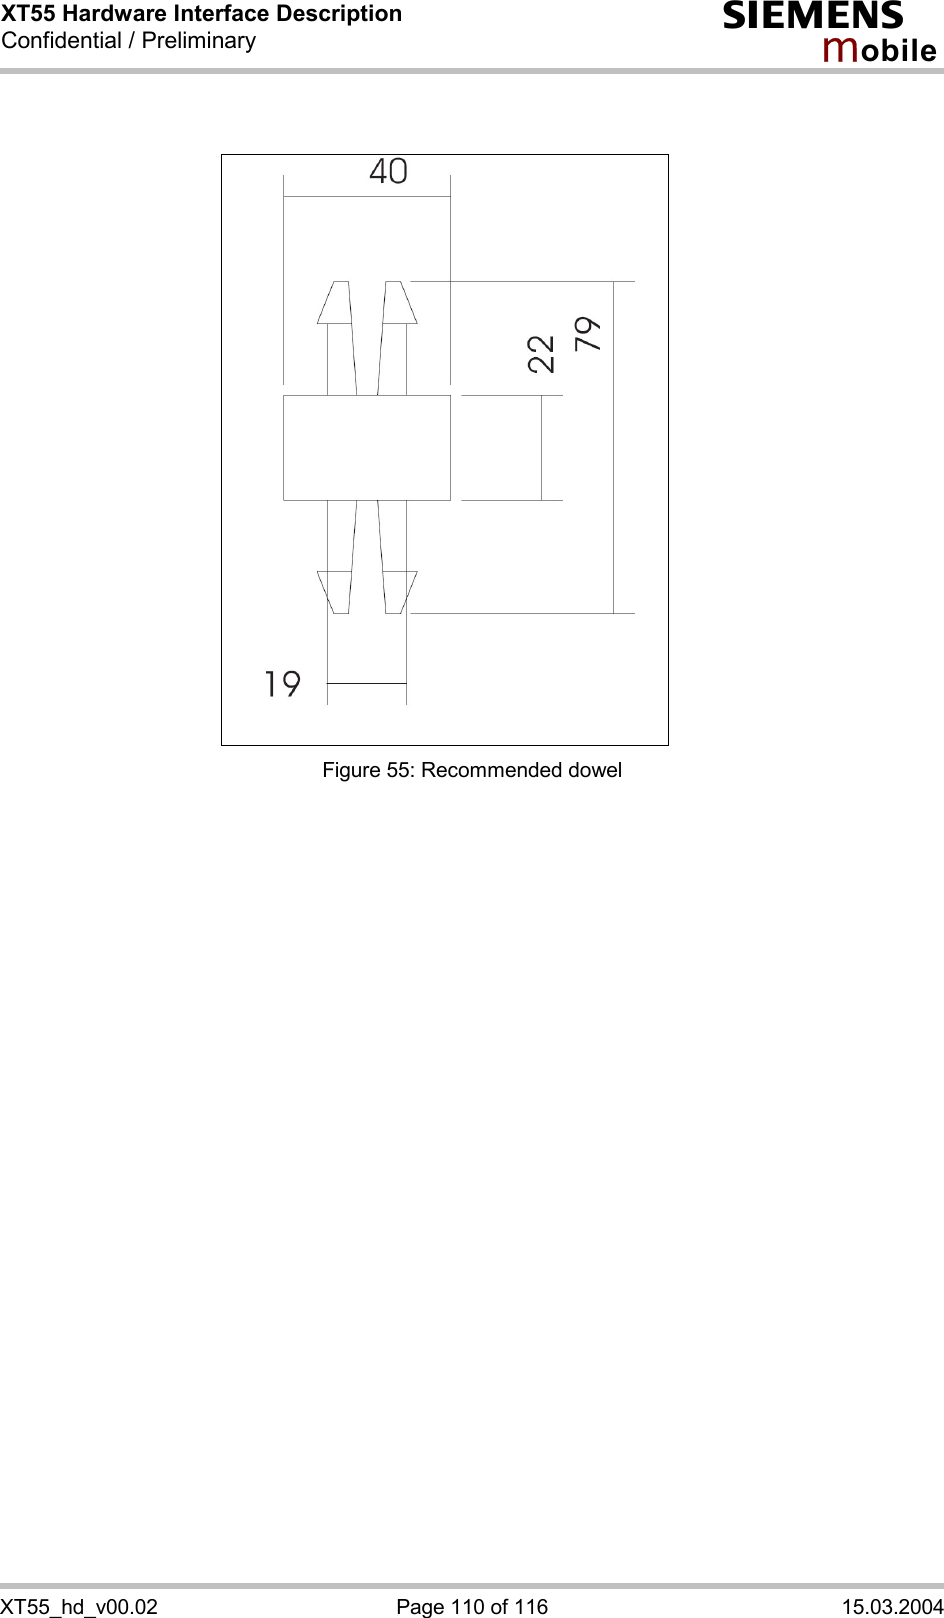 XT55 Hardware Interface Description Confidential / Preliminary s mo b i l e XT55_hd_v00.02  Page 110 of 116  15.03.2004          Figure 55: Recommended dowel  